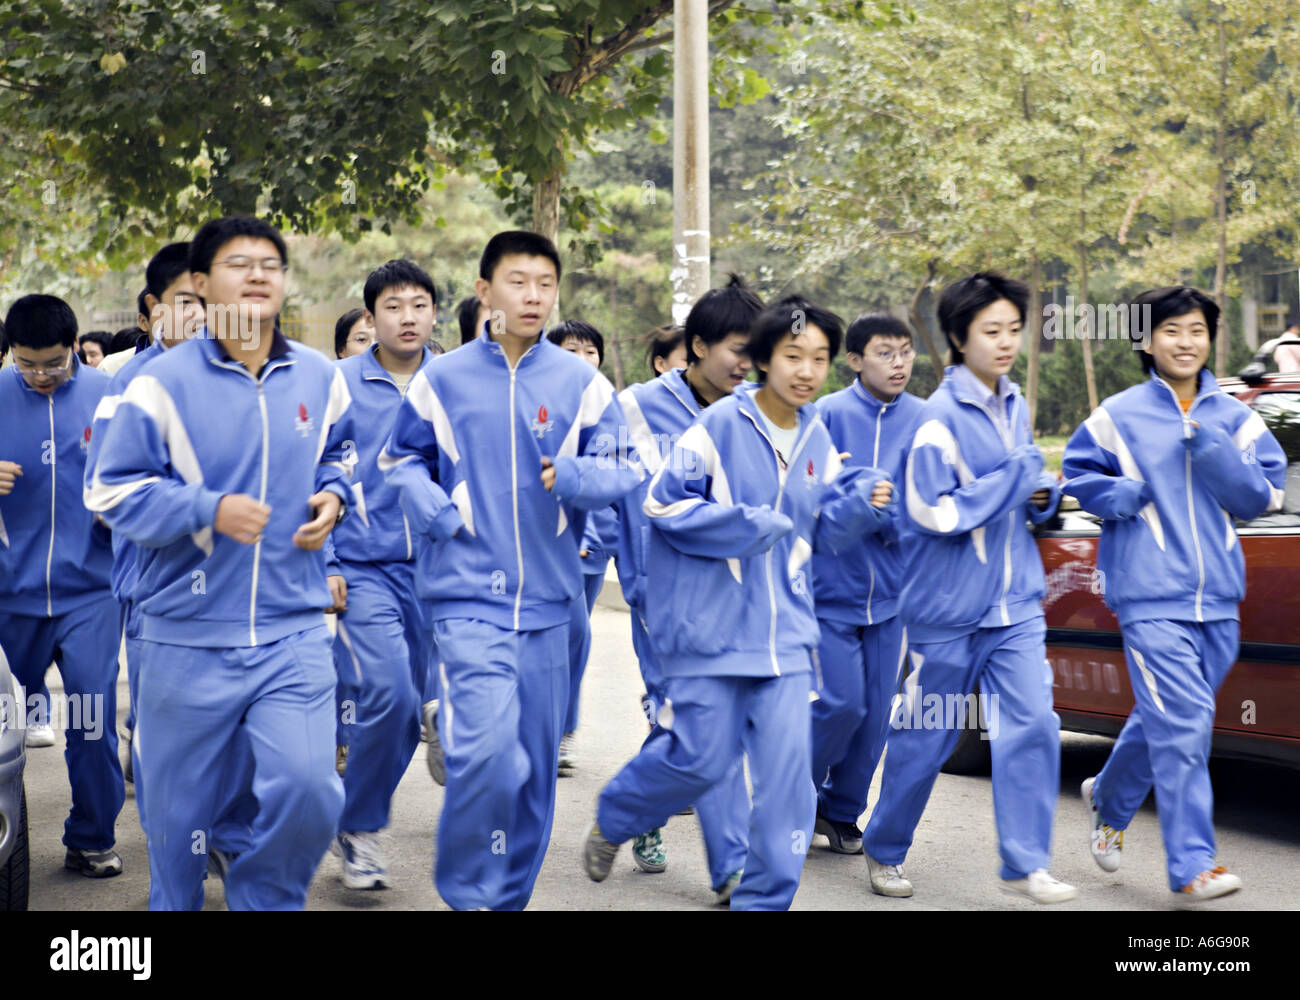 china-beijing-high-school-physical-education-class-students-running-A6G90R.jpg